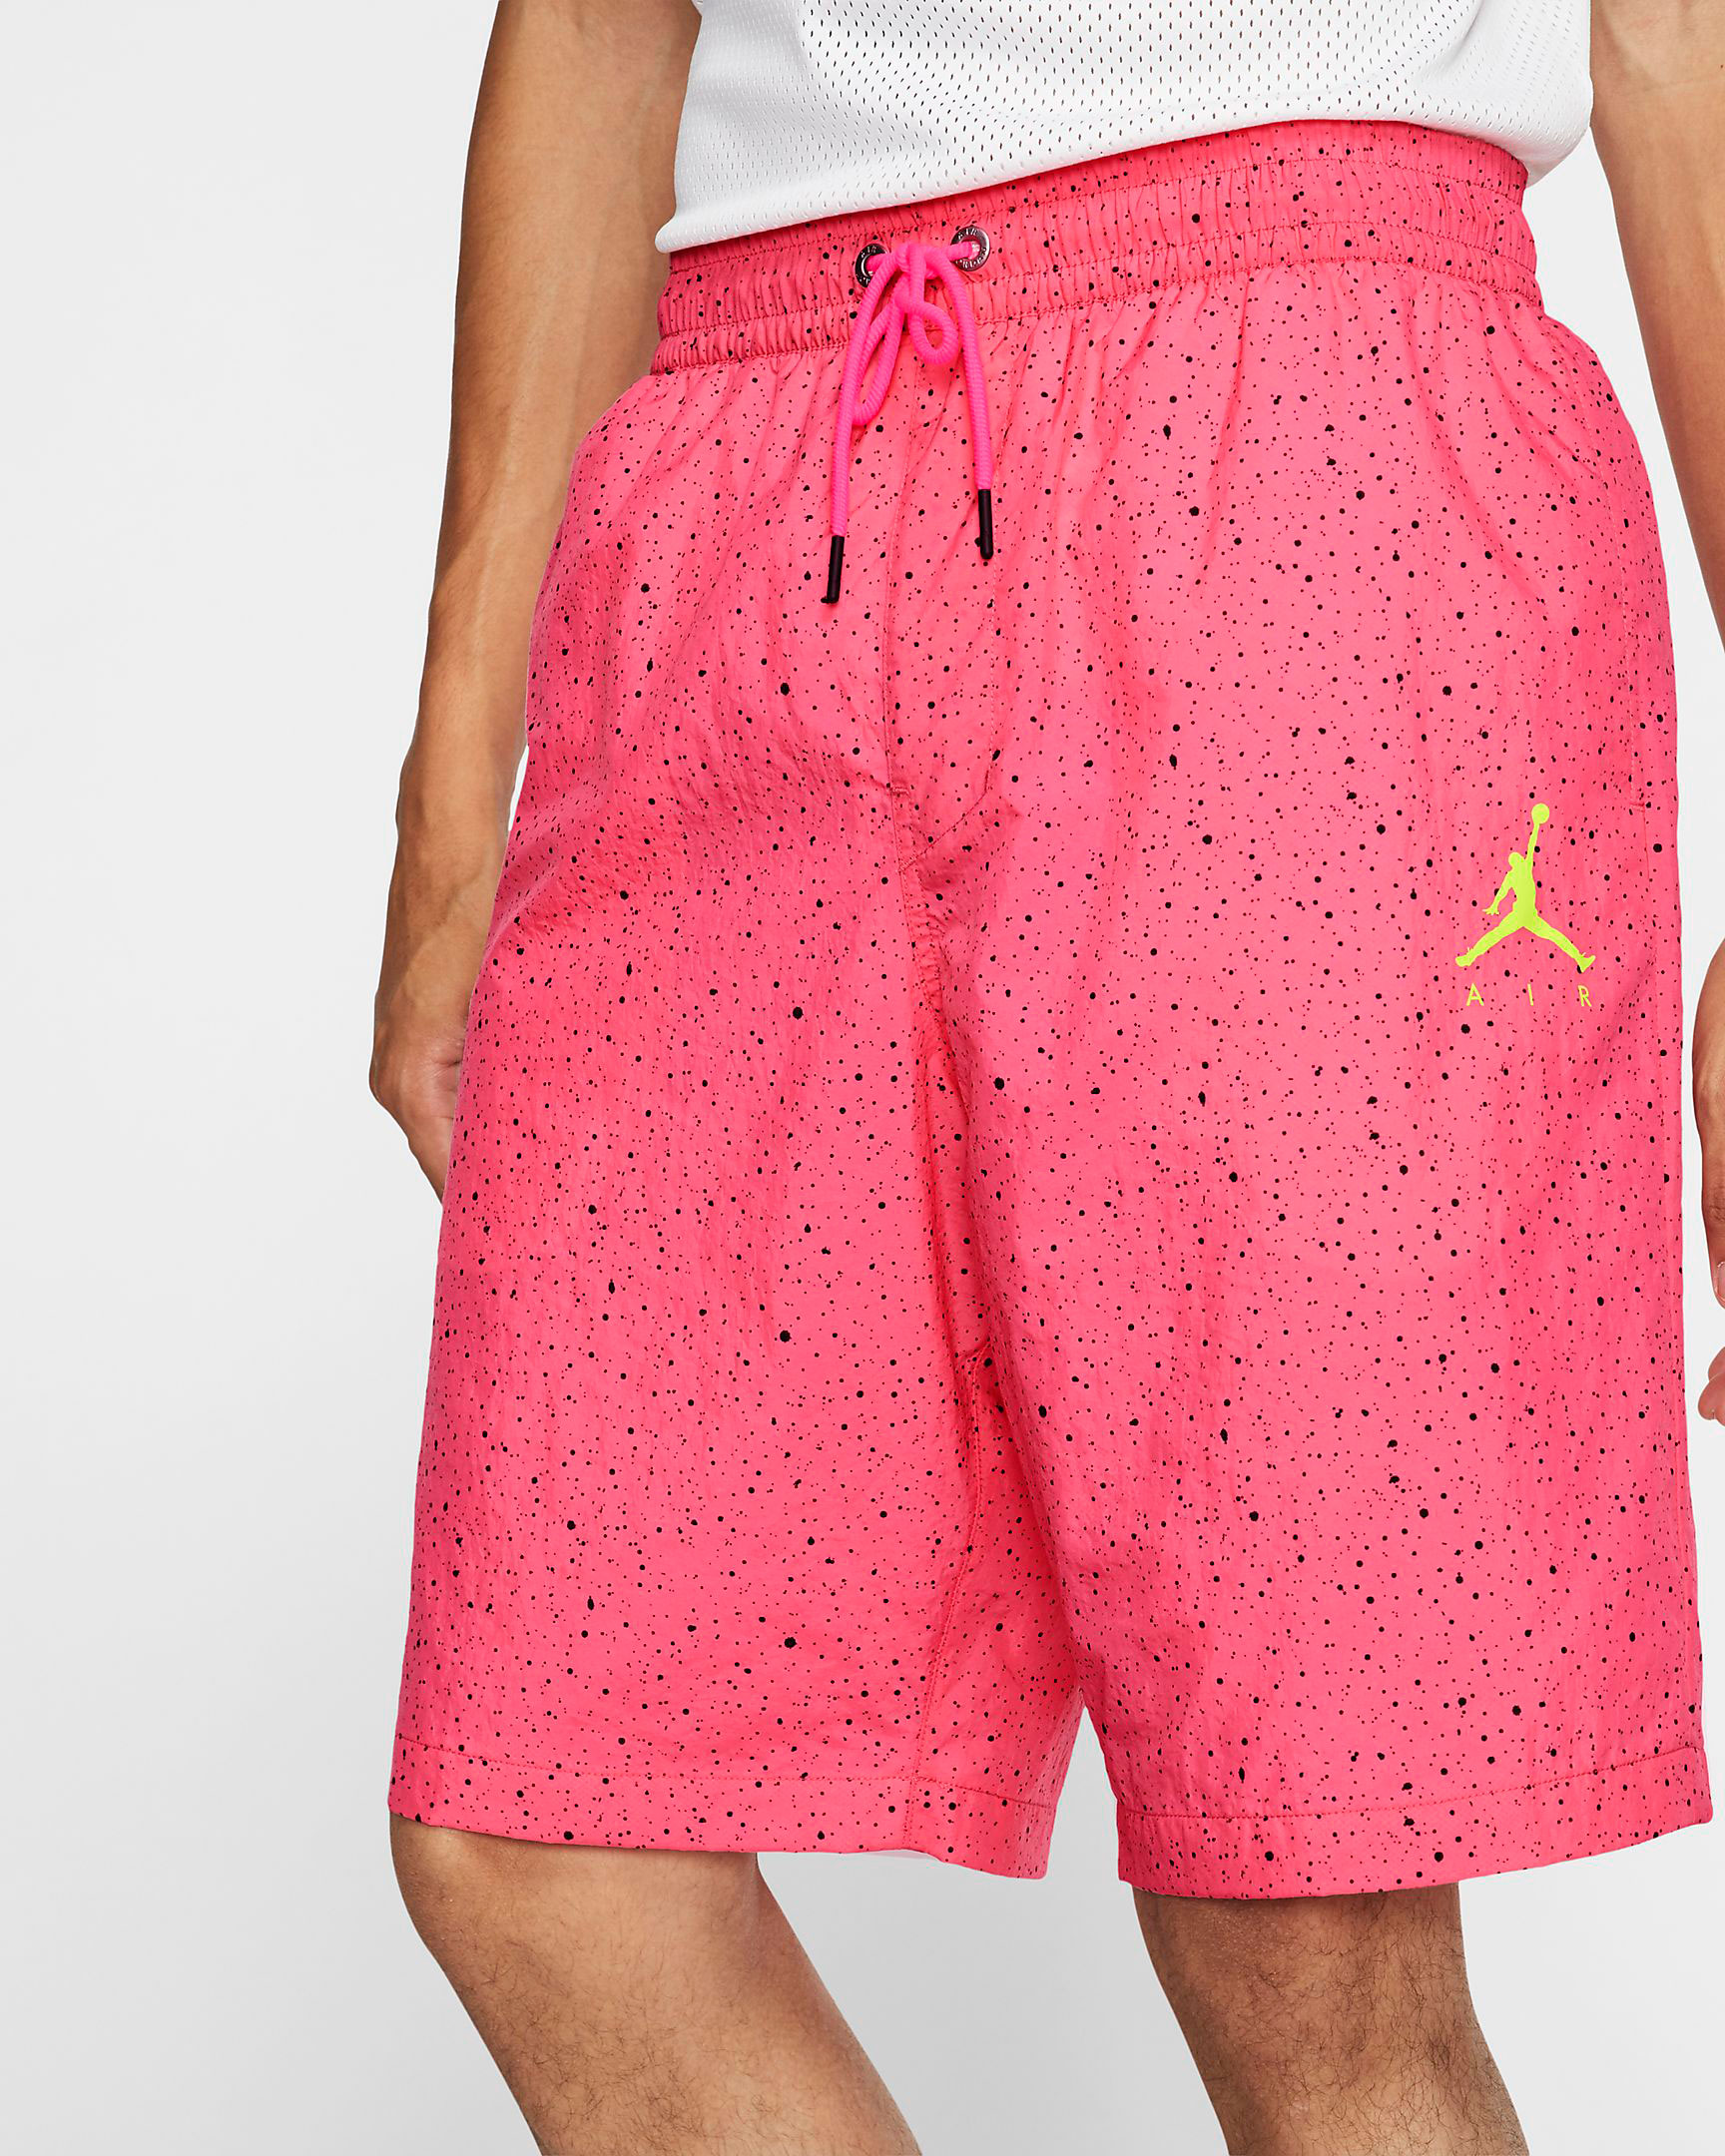 jordan-pink-poolside-shorts-1